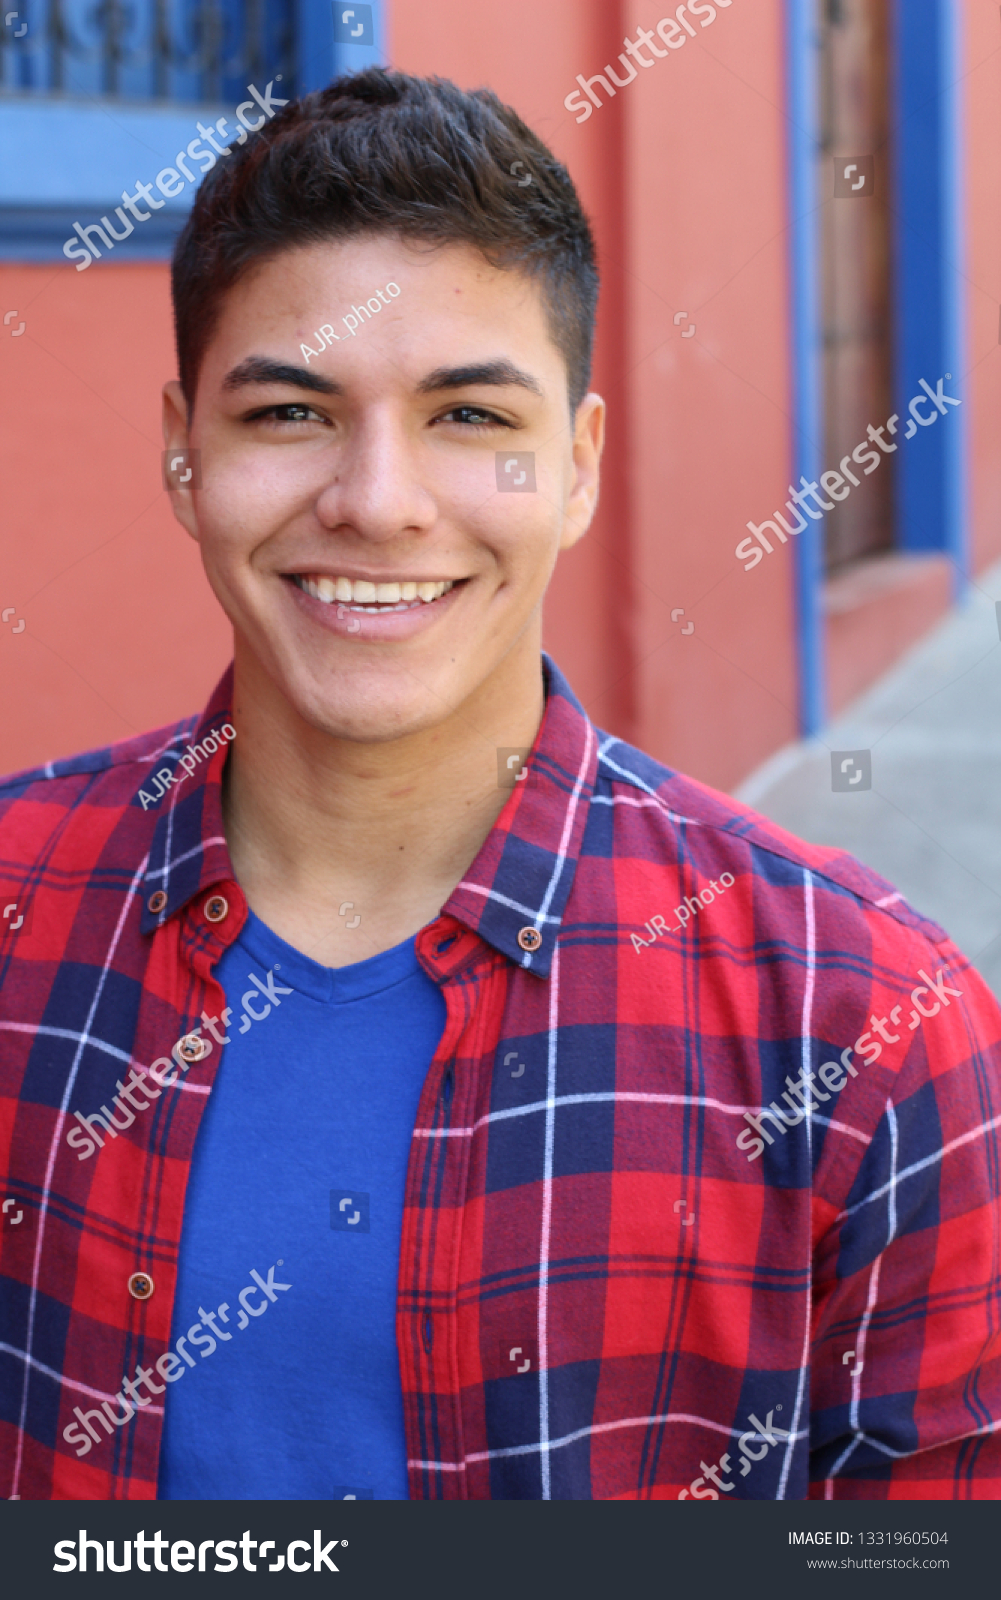 Stock Photo Ethnic Young Guy Smiling Headshot 1331960504 